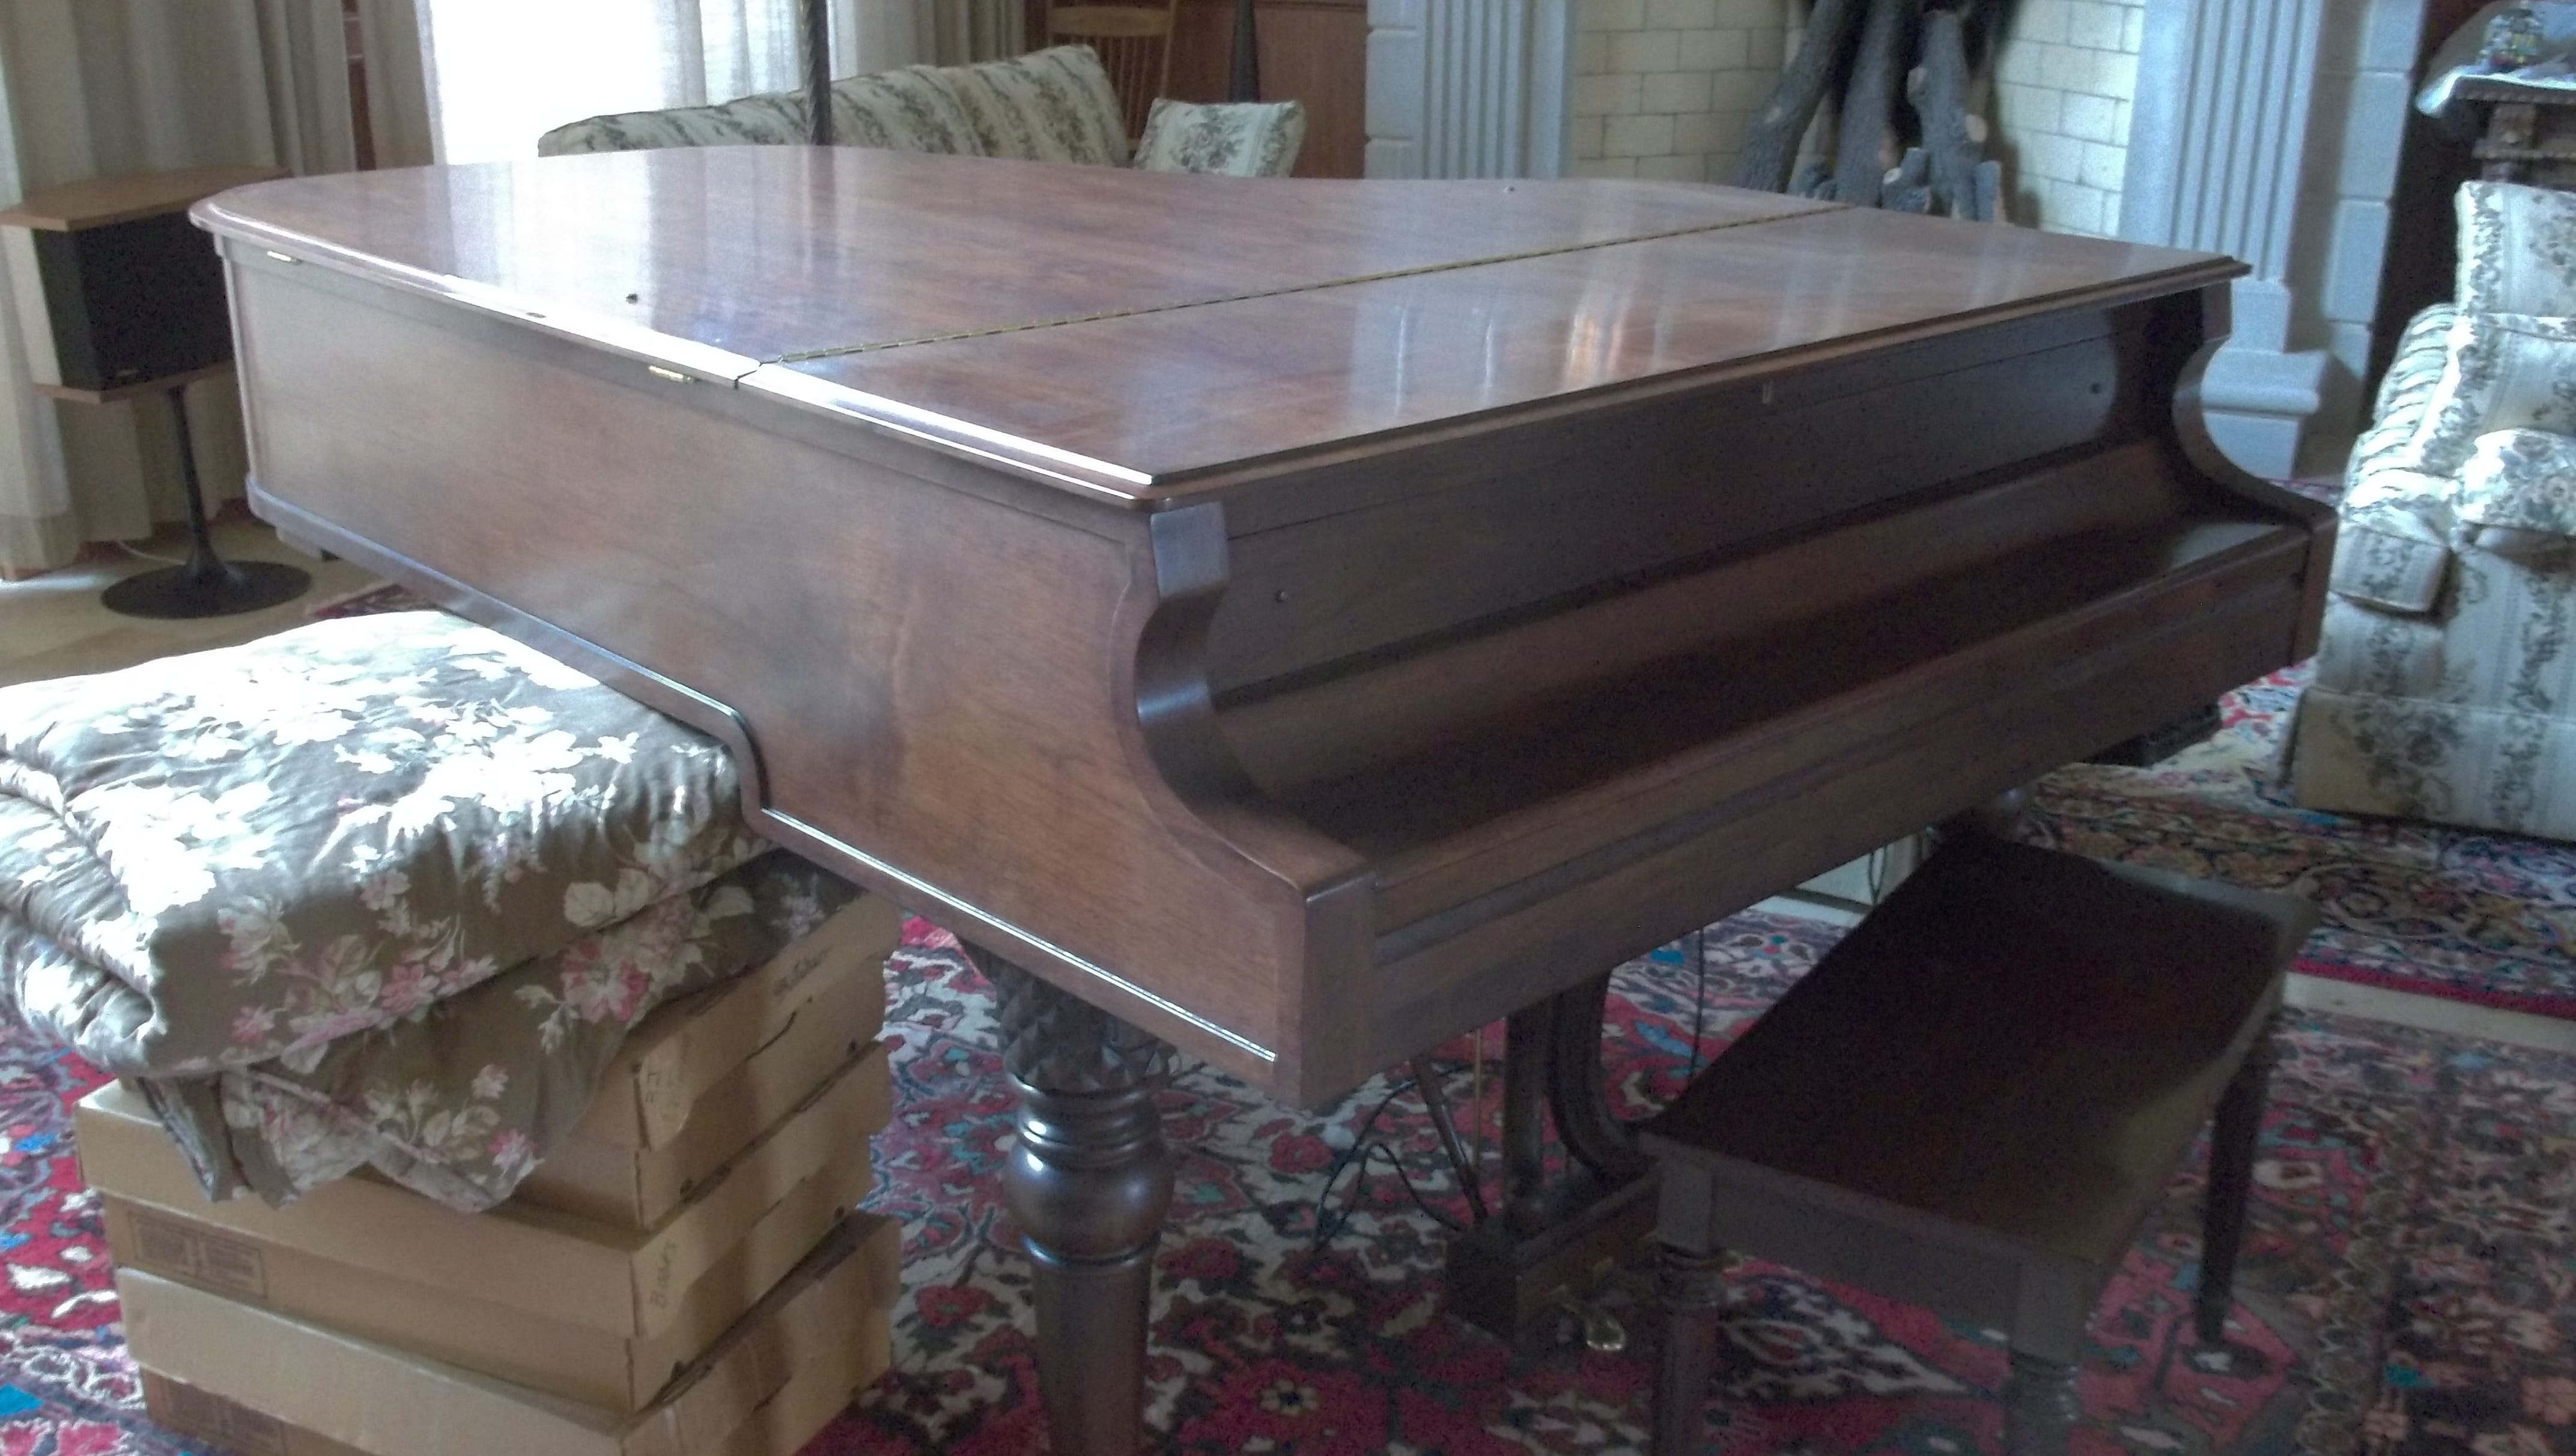 The home also has a grand piano.